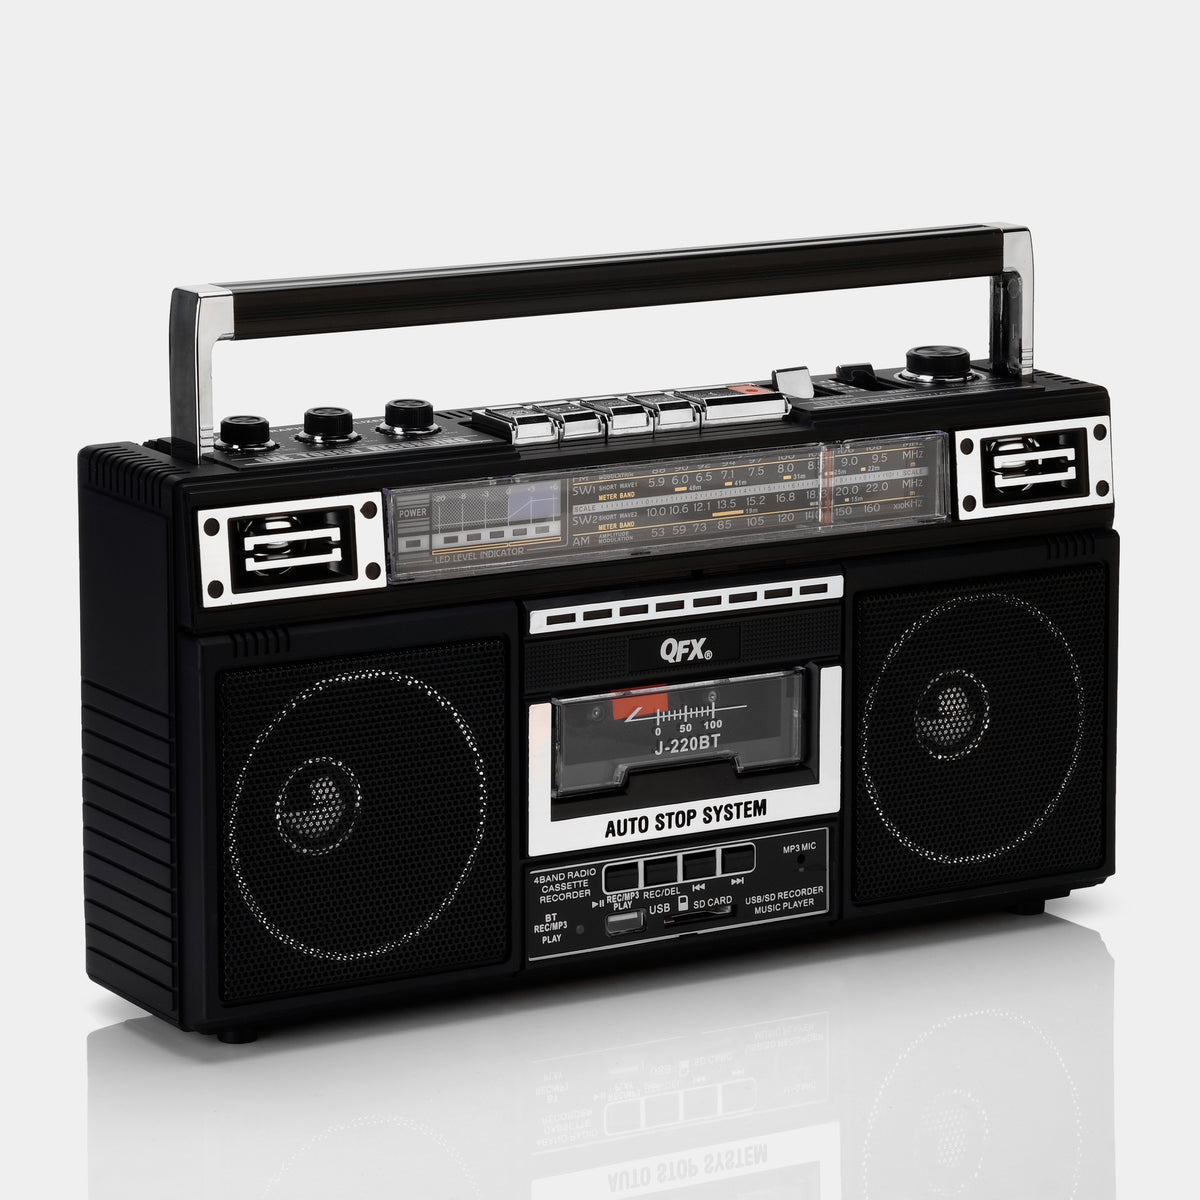 Qfx® J-220bt 9-watt Retro-style Portable Cassette Player Boombox